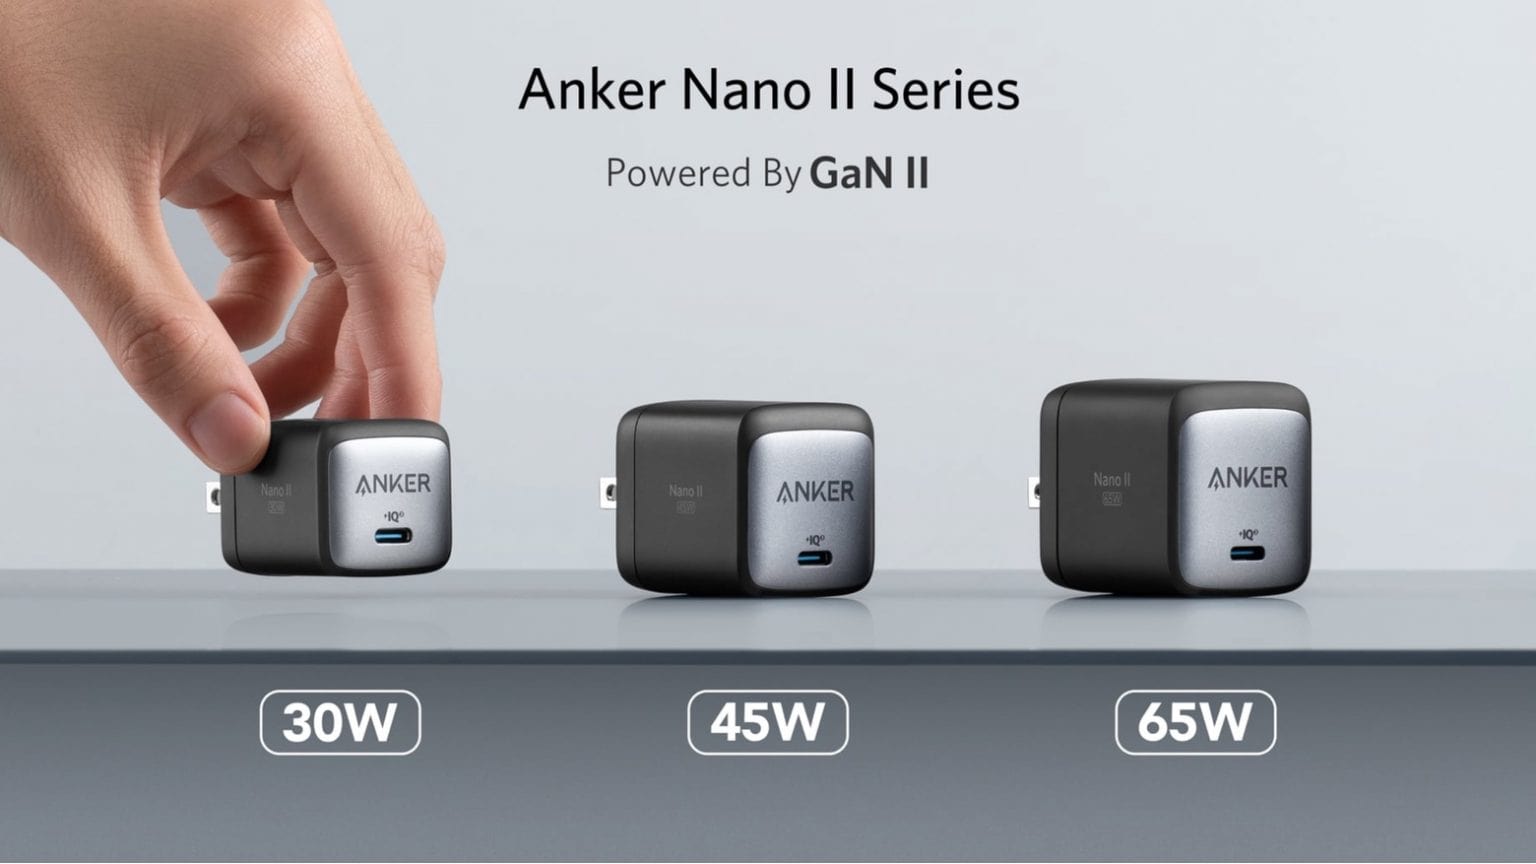 Anker Nano II line offers big power thanks to GaN II